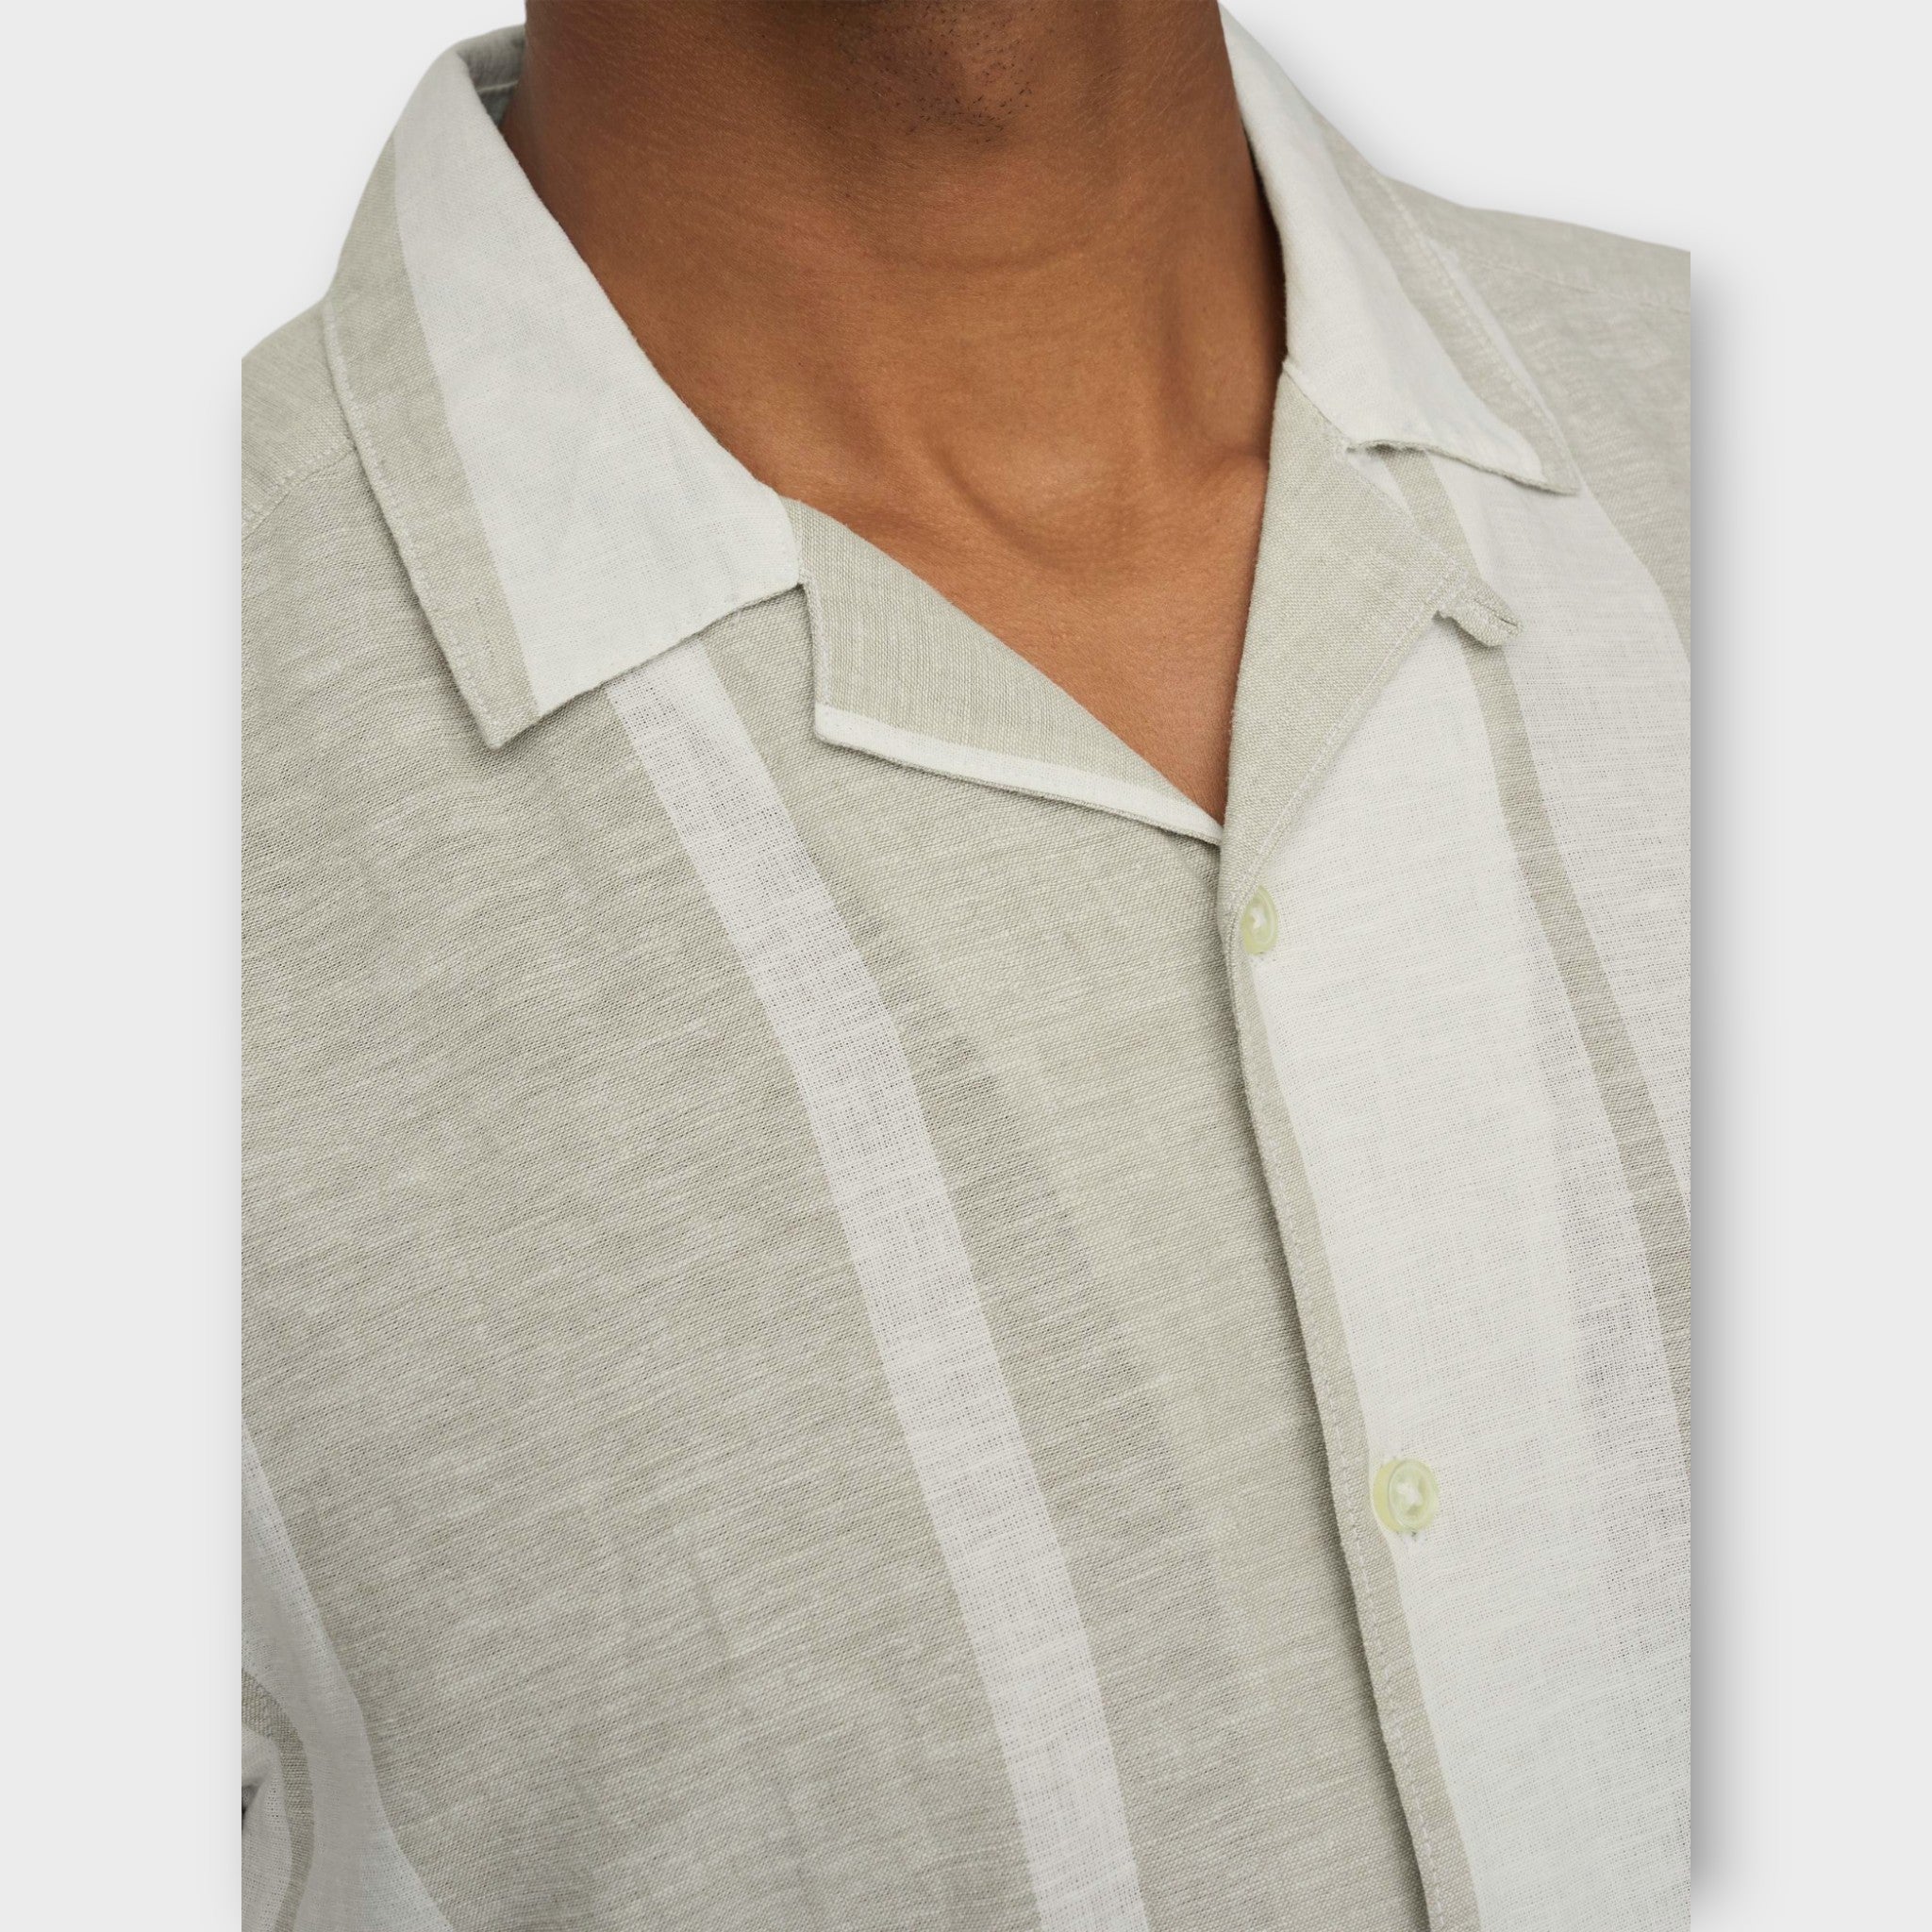 Only and Sons Caiden Stripe Linen Resort Shirt Khaki. Kortærmet sandfarvet stribet hørskjorte til mænd. Her ses skjorten i closeup.